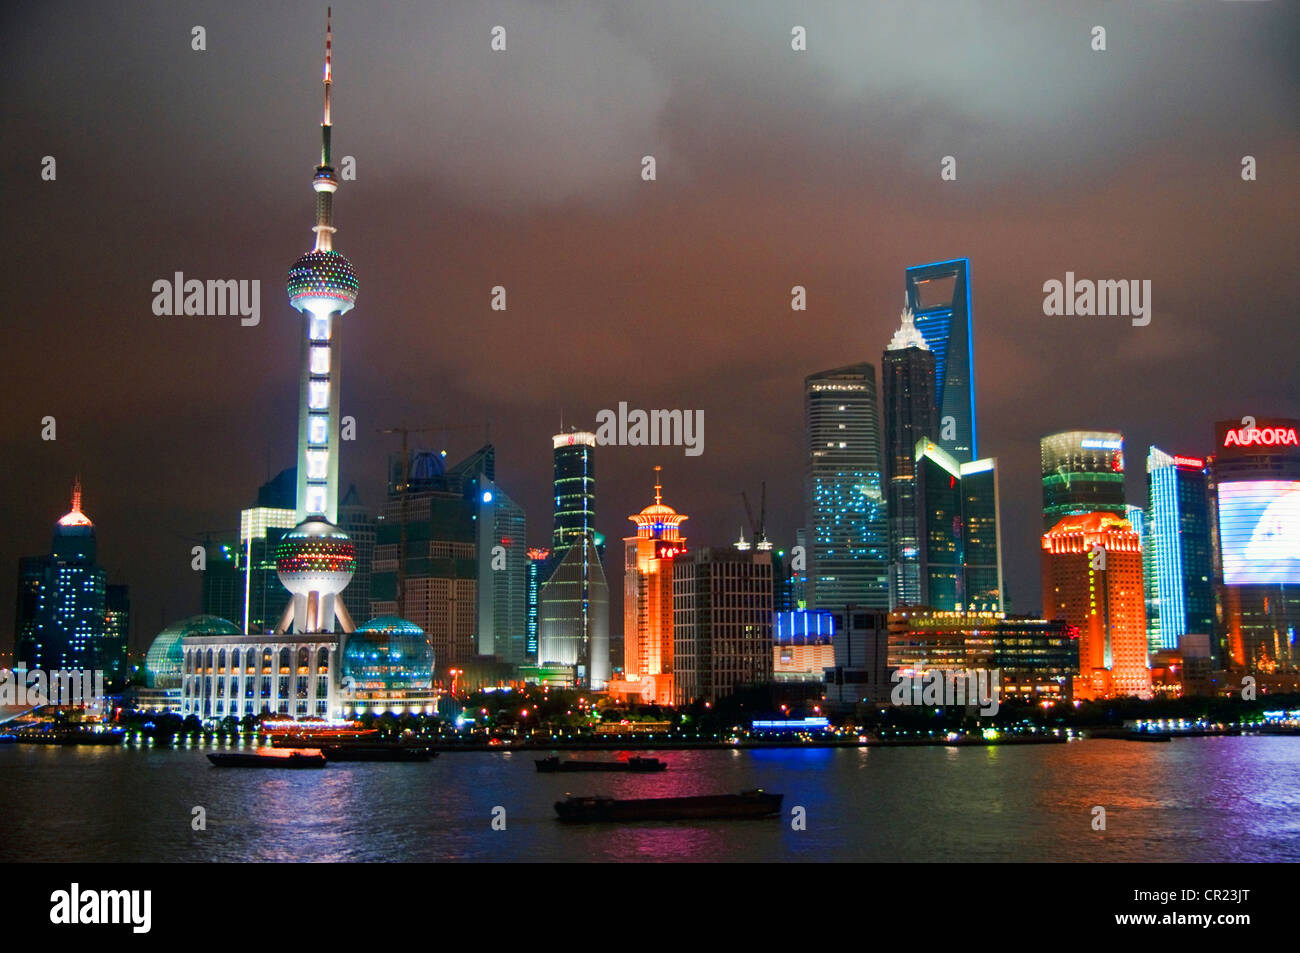 China: Shanghai's Pudong skyline at night Stock Photo